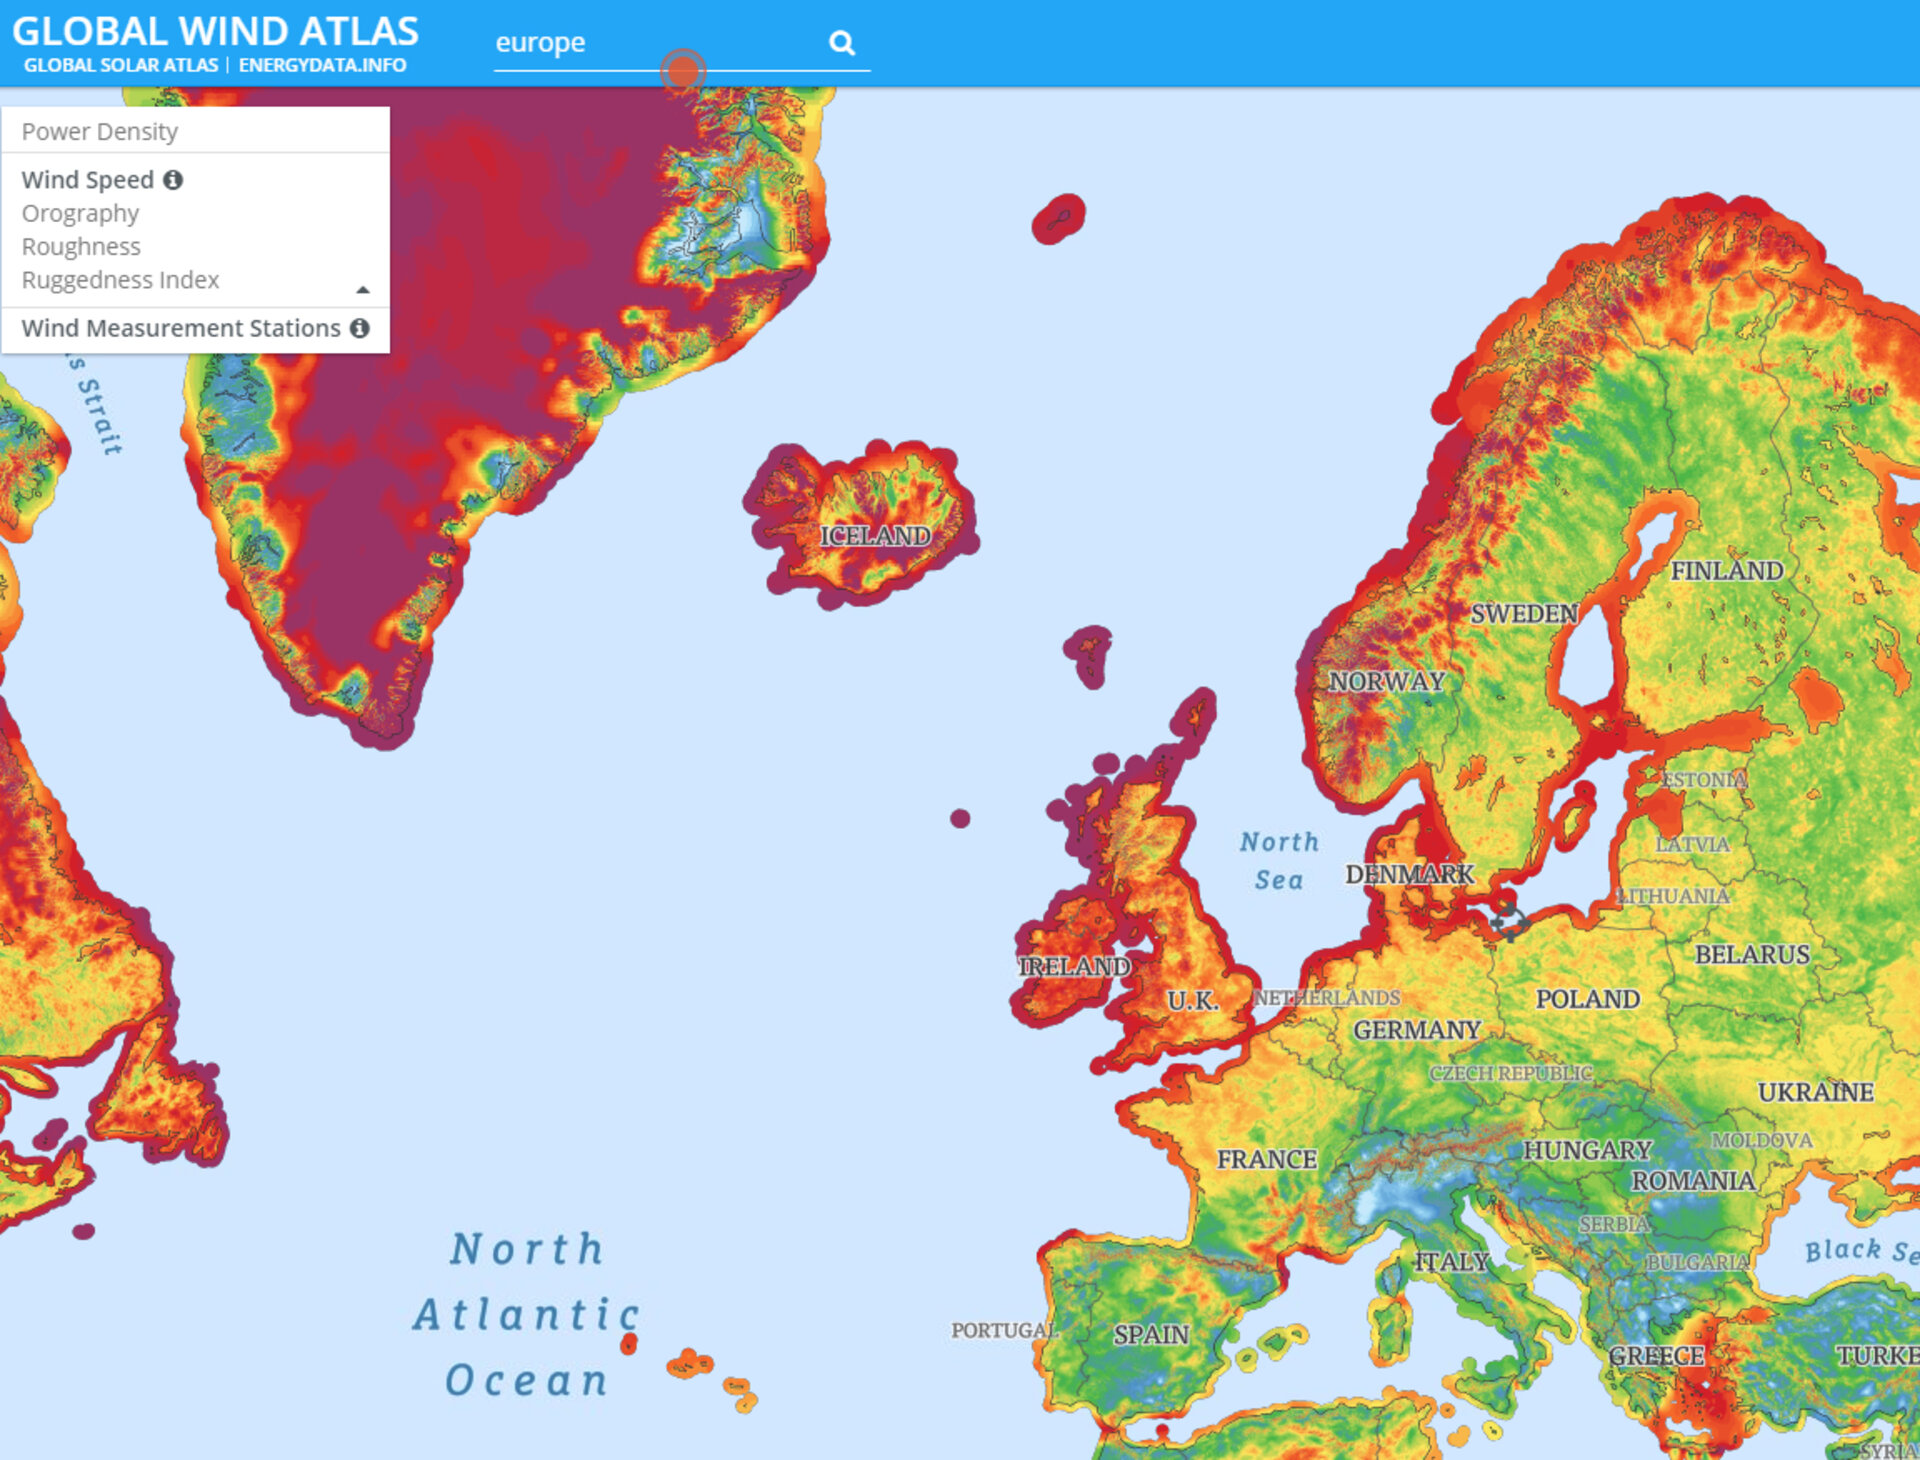 Global wind atlas overlay